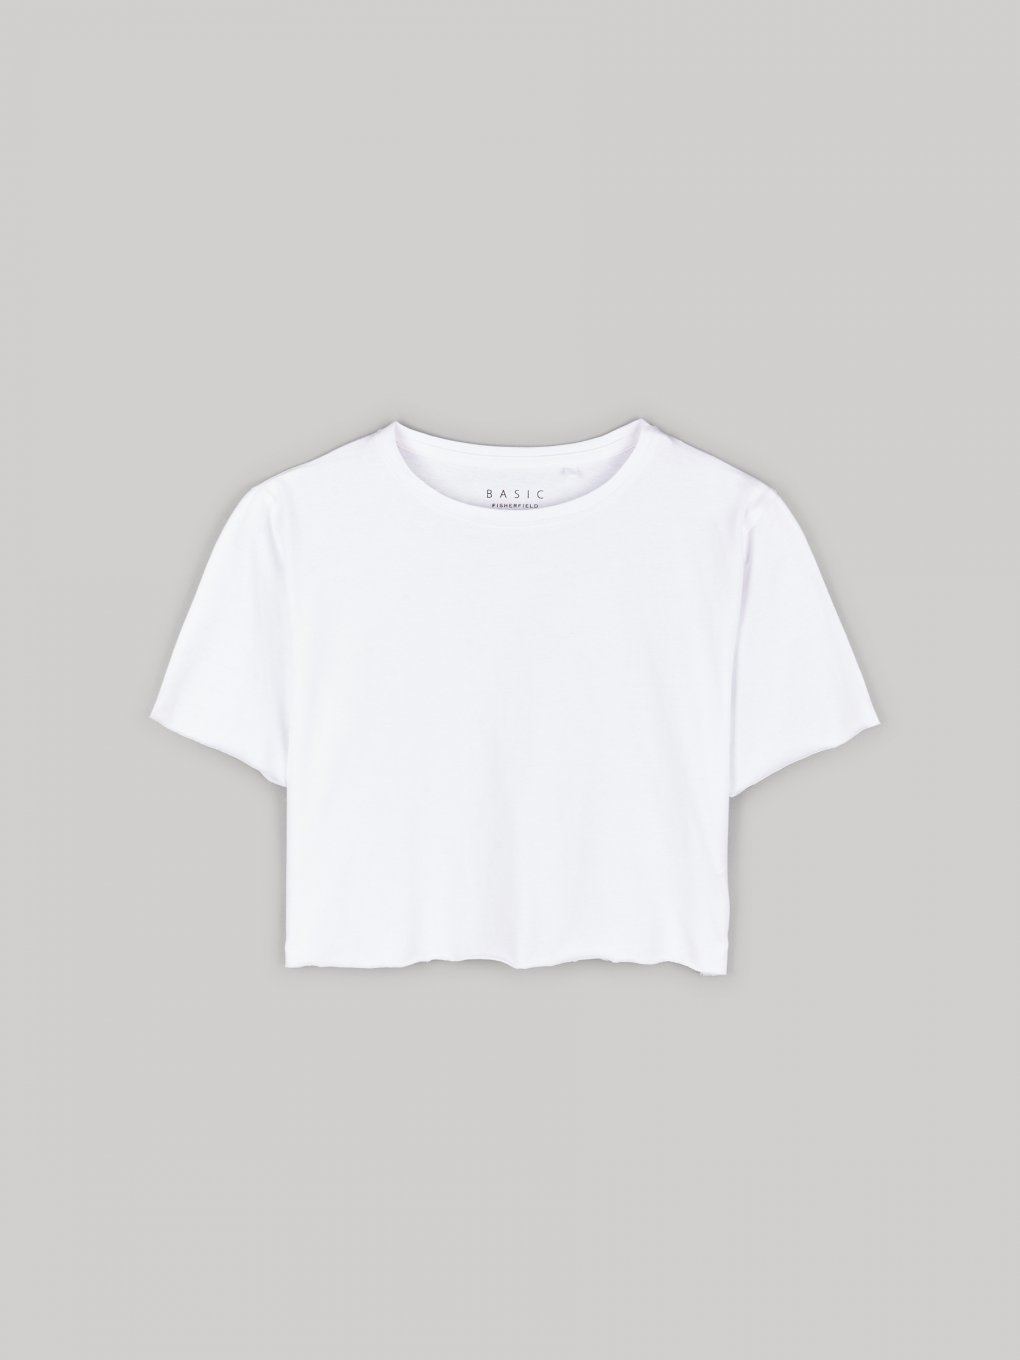 Základné basic krátke tričko s neopracovaným lemom